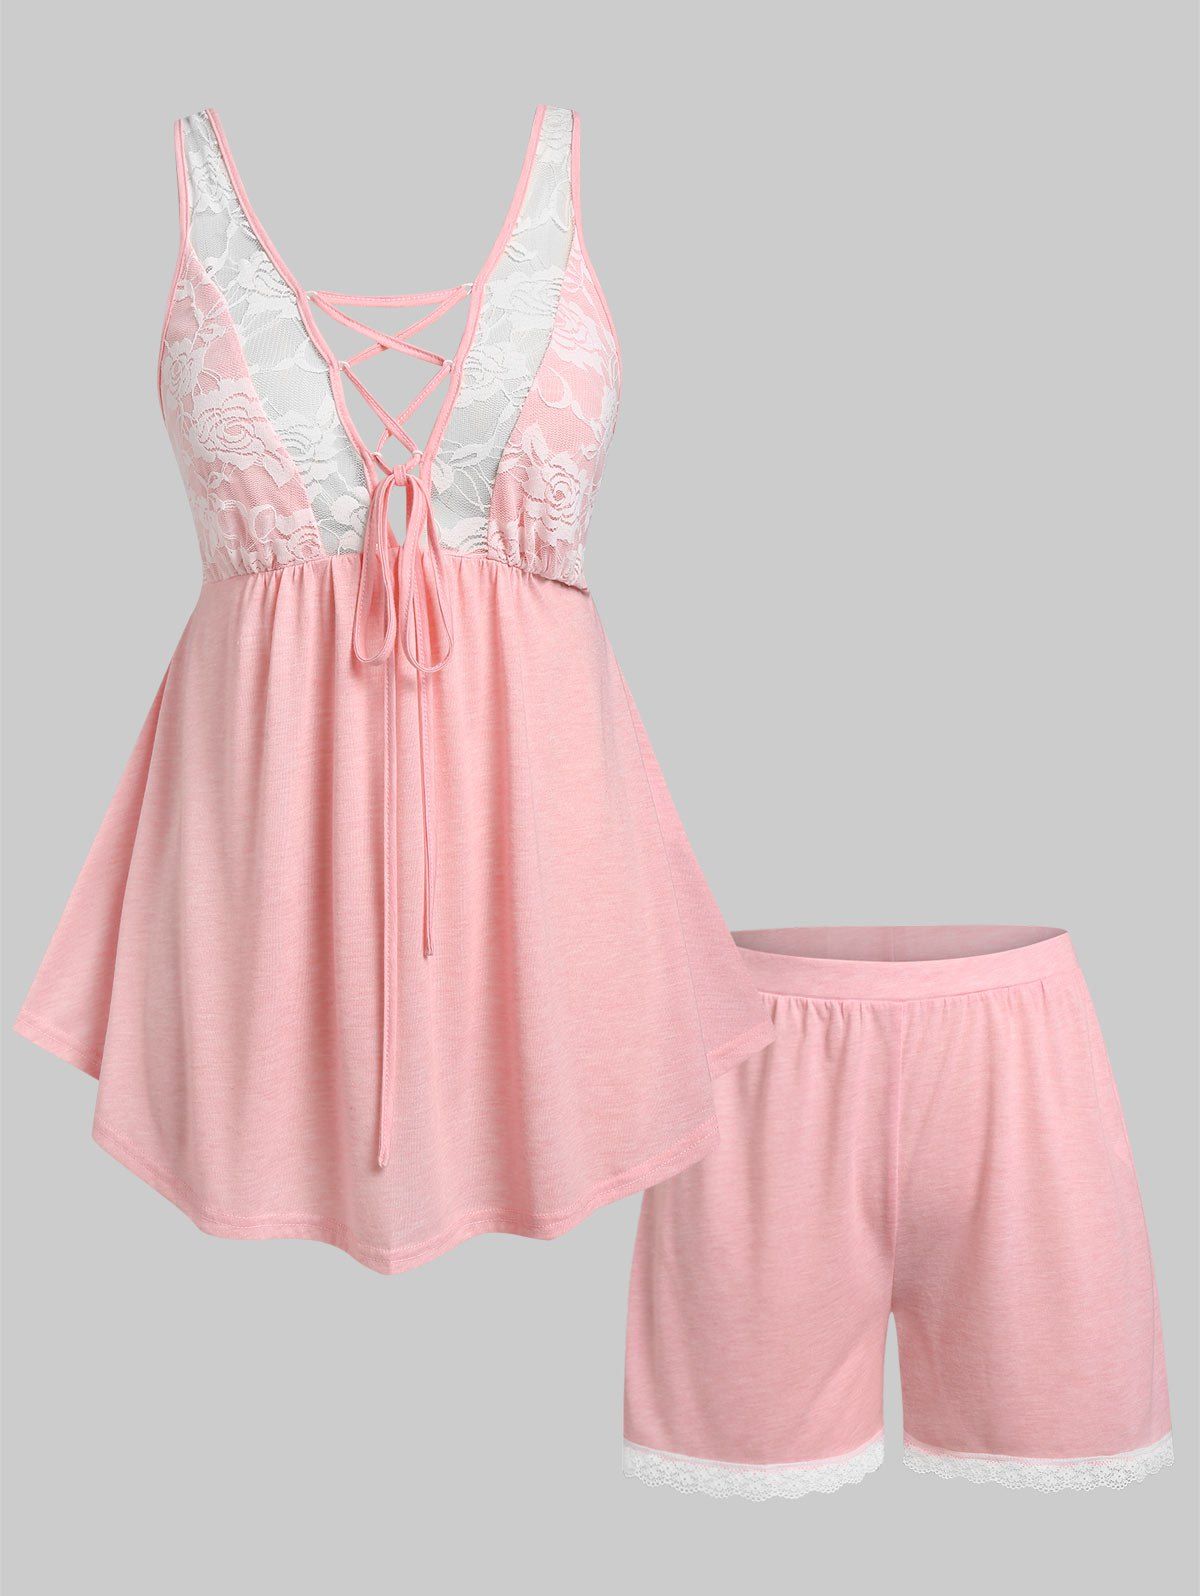 Plus Size Lace Sheer Lace-up Pajama Shorts Set - LIGHT PINK 4X